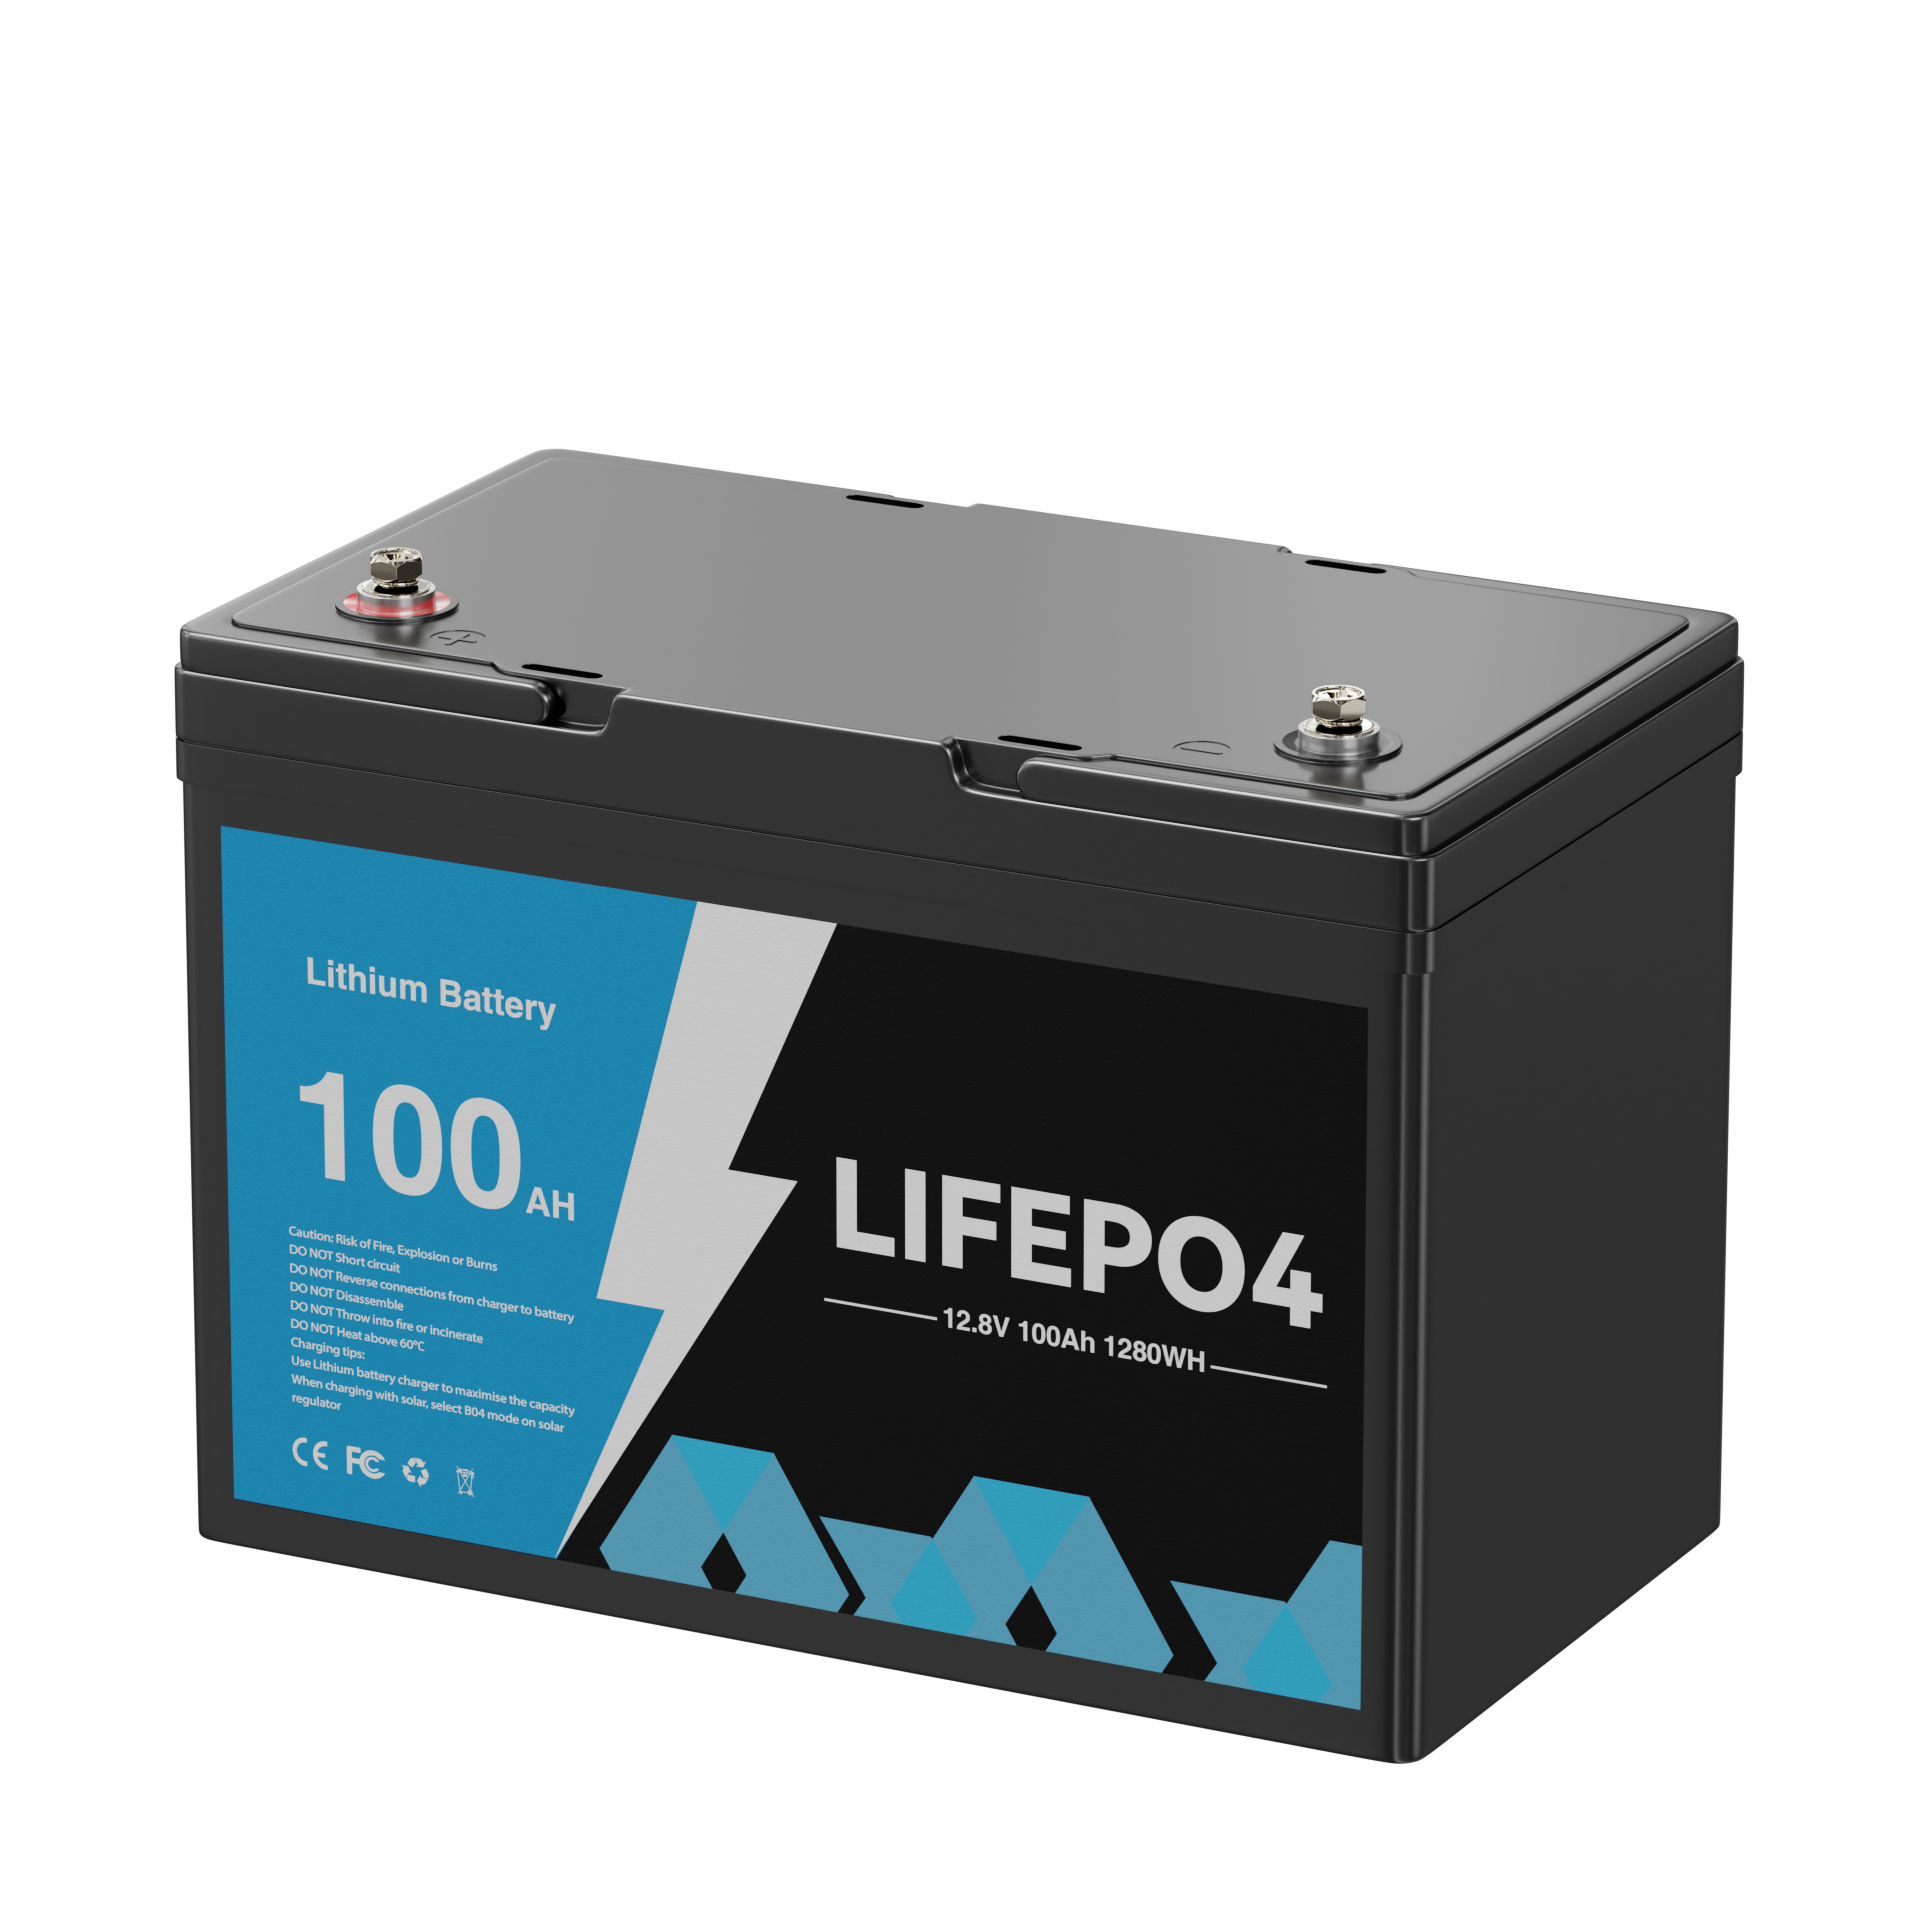 12.8V50AH鉛改鋰電池 適用于房車 電動車鋰電池 大容量鋰電池